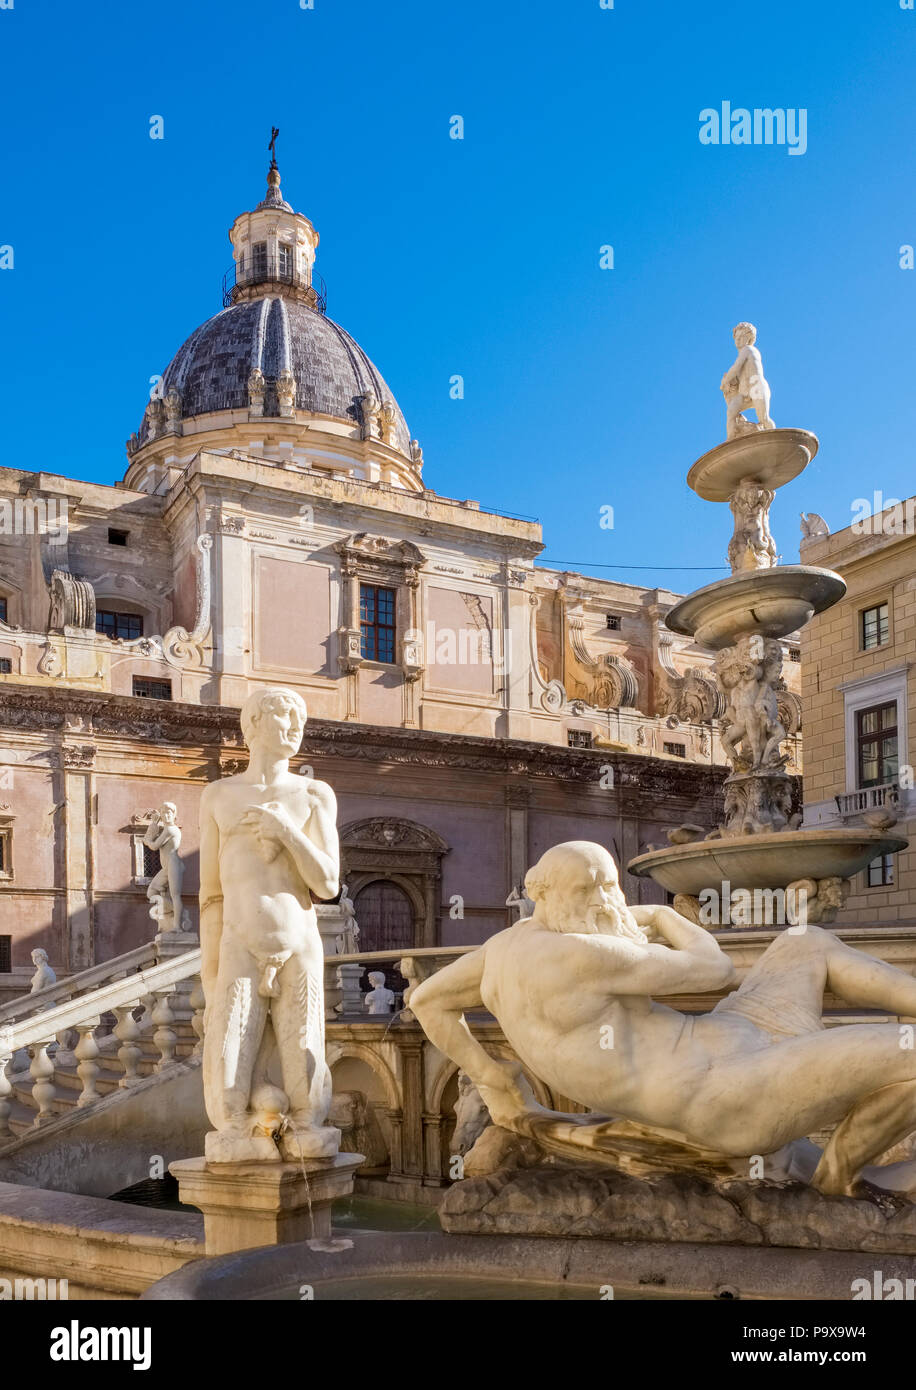 Die Fontana Pretoria, Praetorian Brunnen auf der Piazza Pretoria in Palermo, Sizilien, Italien, Europa Stockfoto